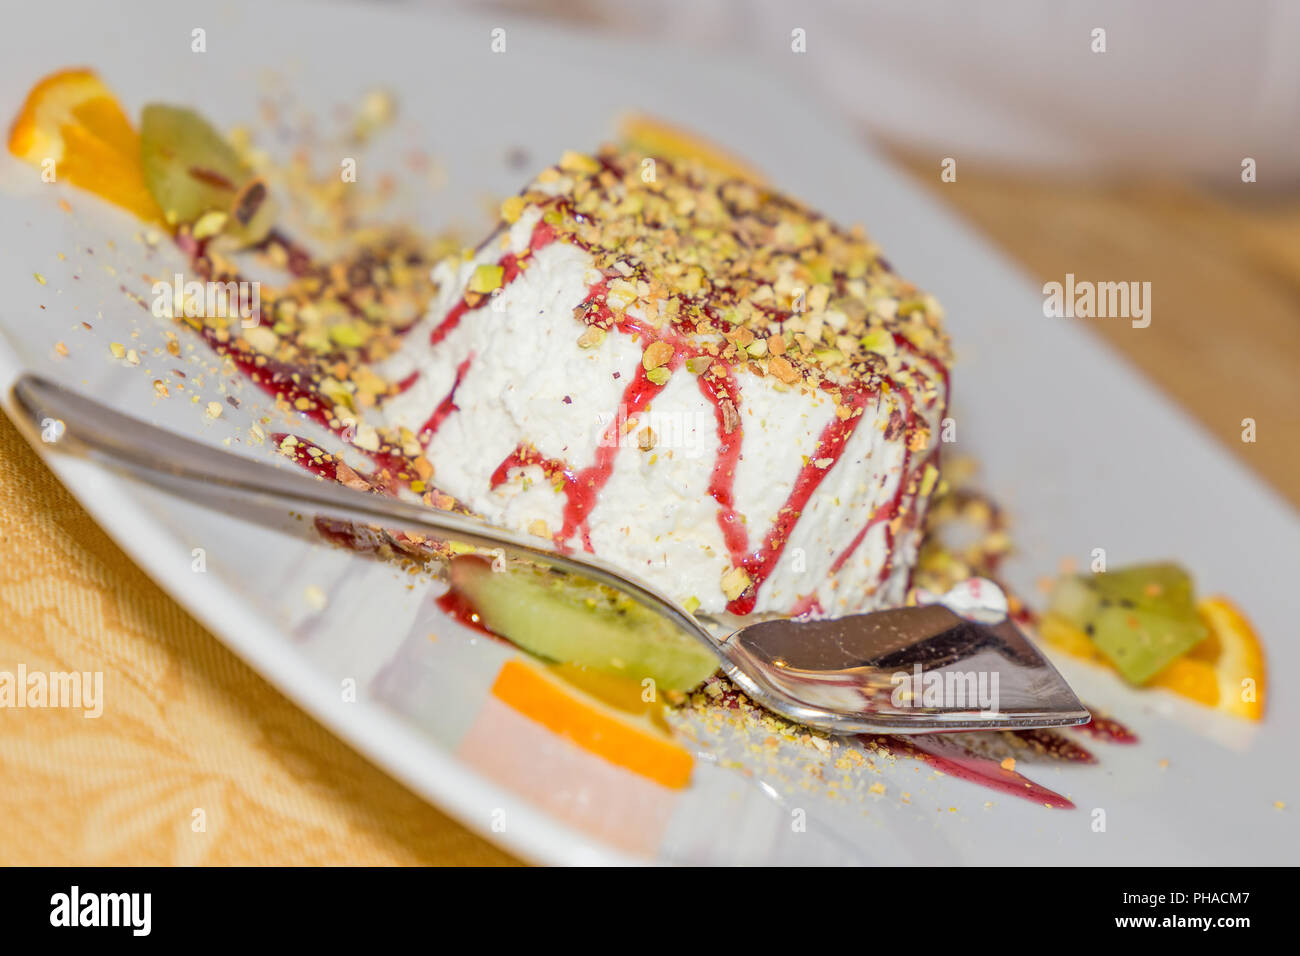 A dish of dessert bavarian cream Stock Photo